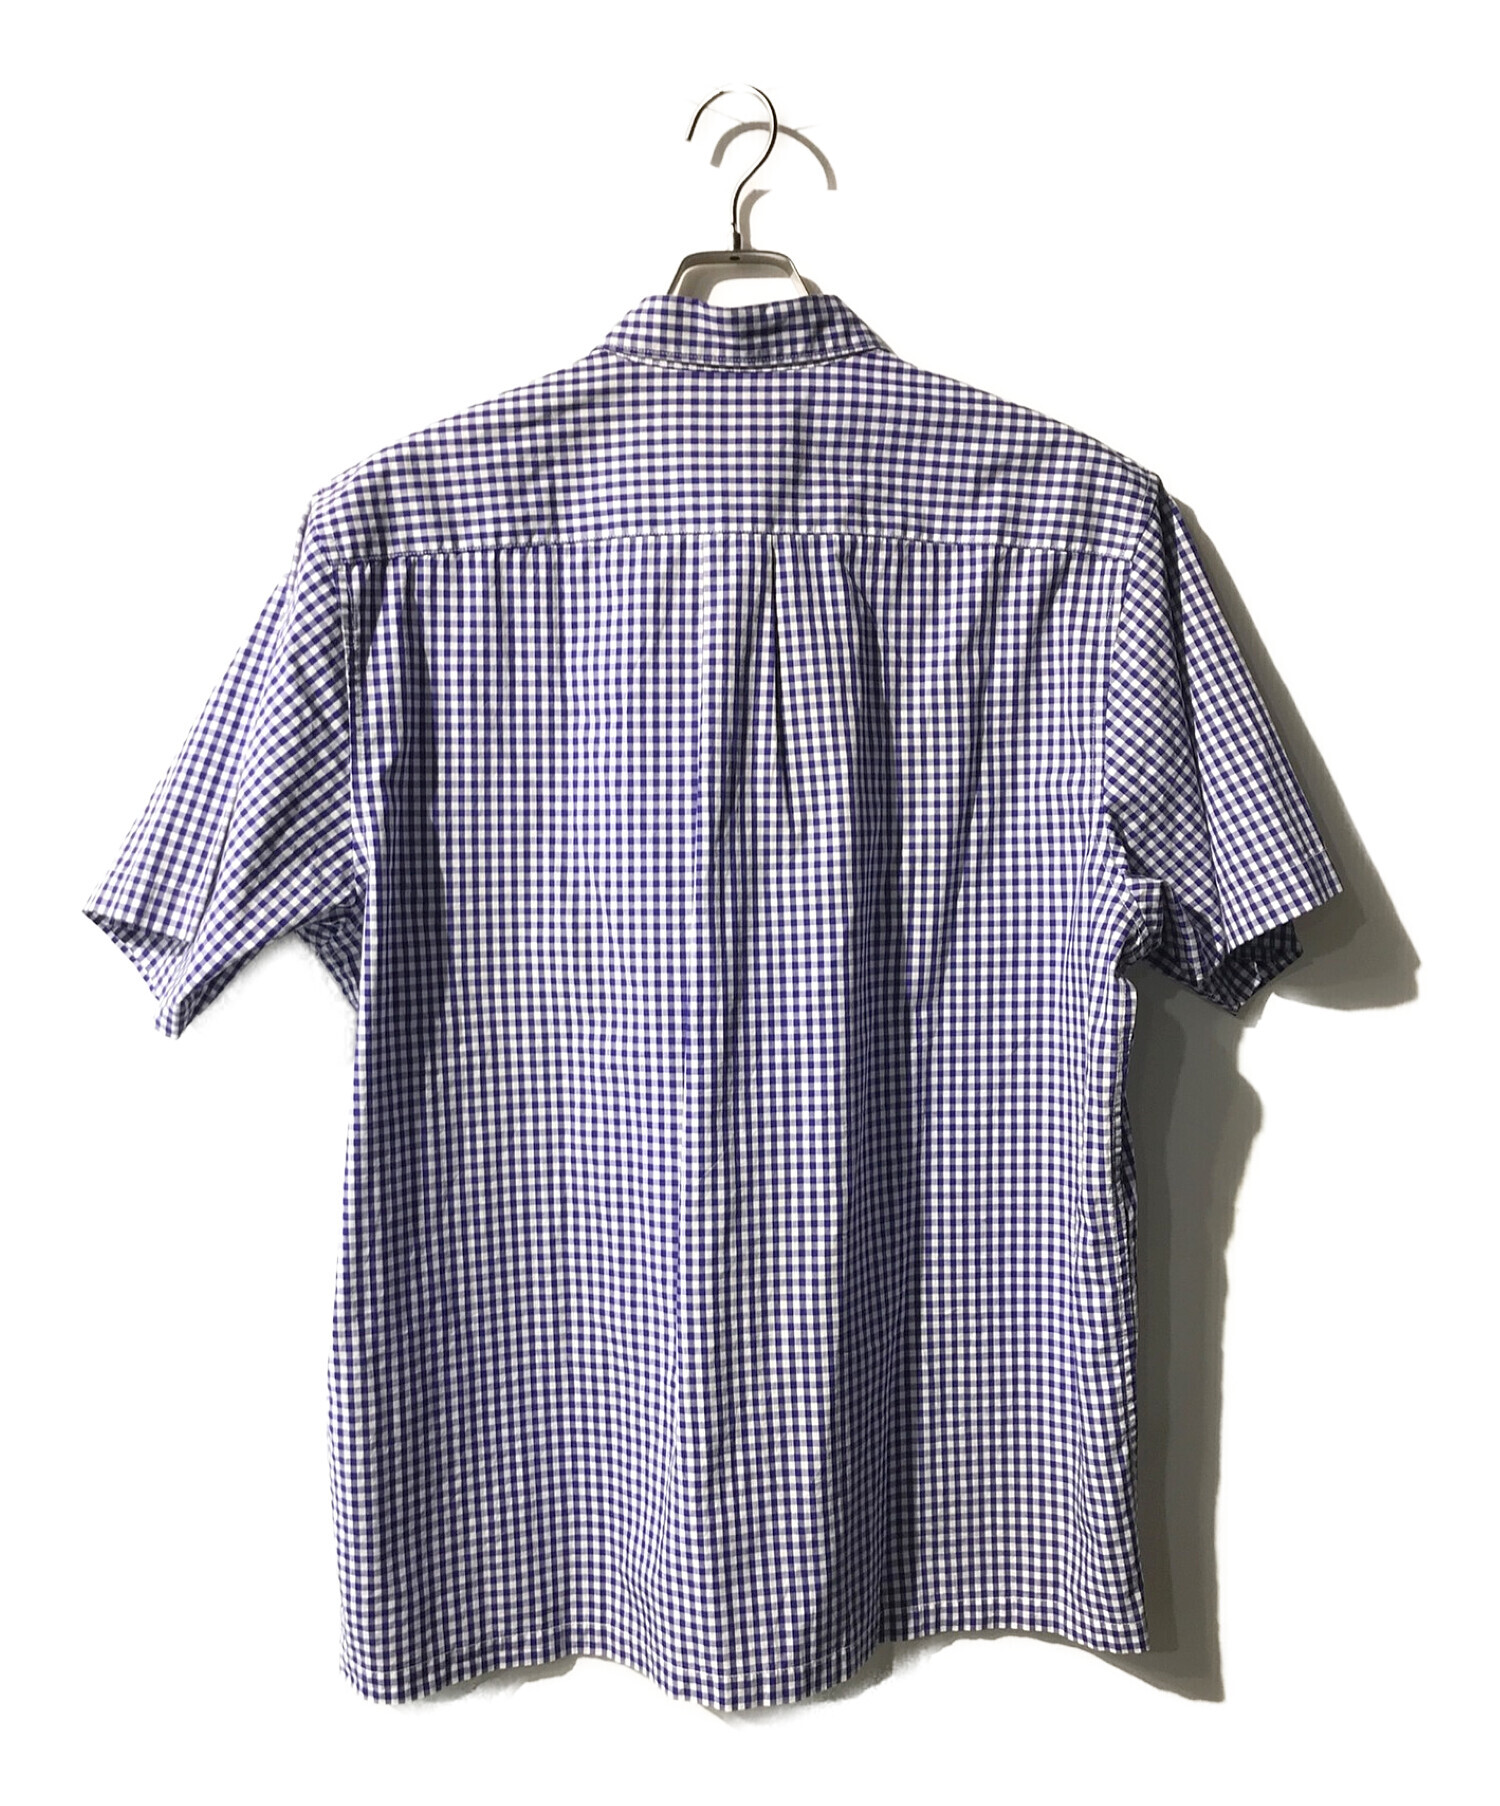 Supreme (シュプリーム) Gingham S/S Shirt/ギンガムチェックシャツ ブルー×ホワイト サイズ:L